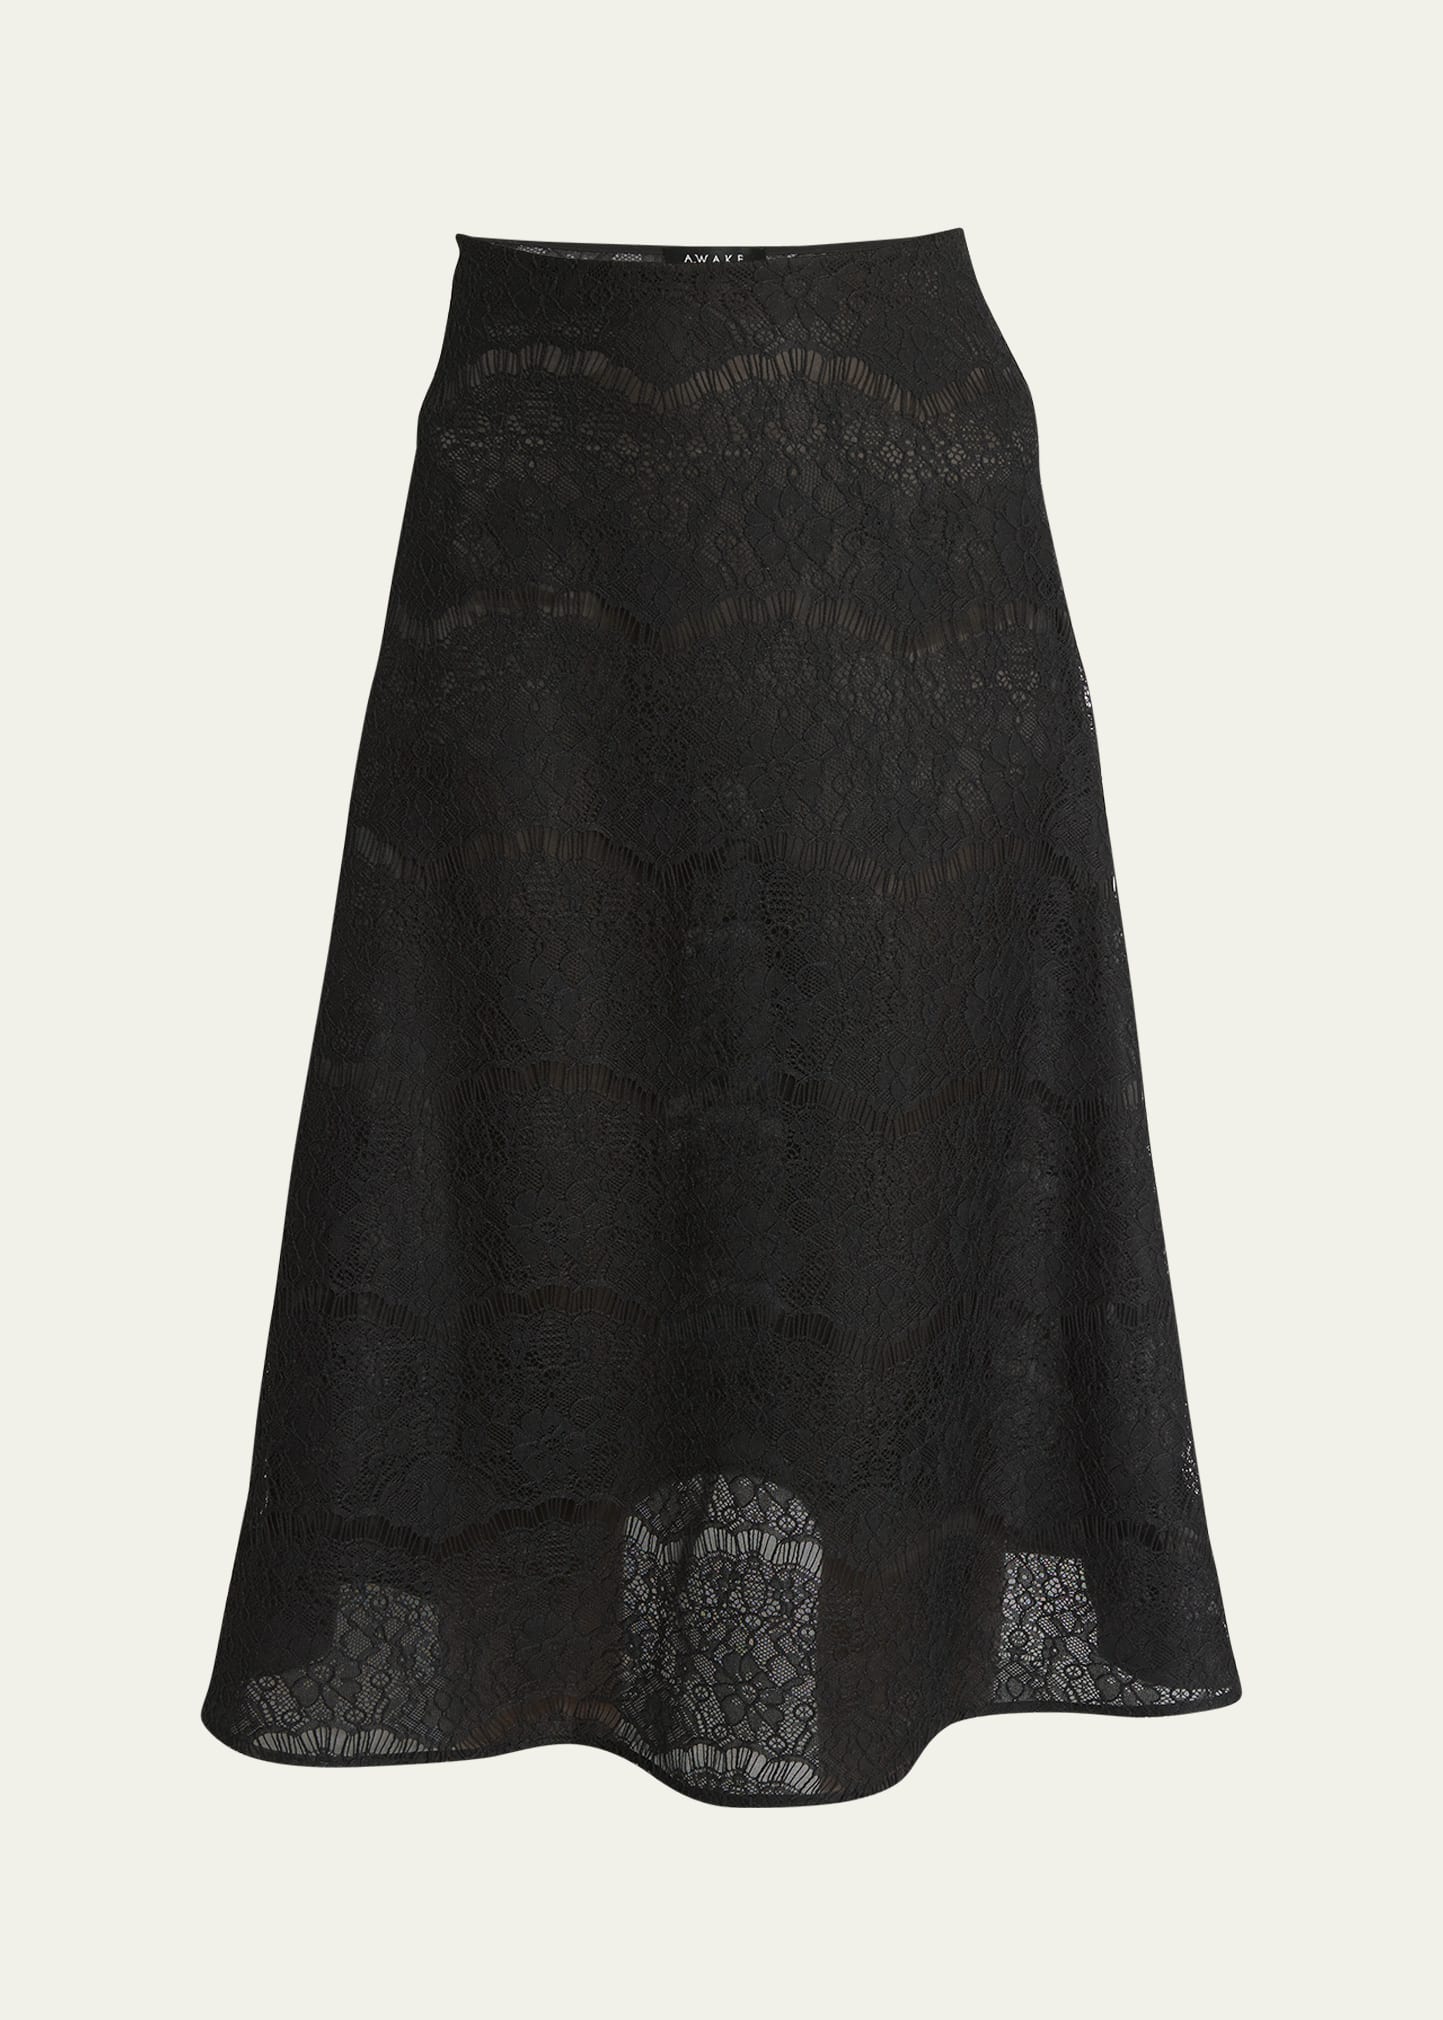 Lace Midi Skirt